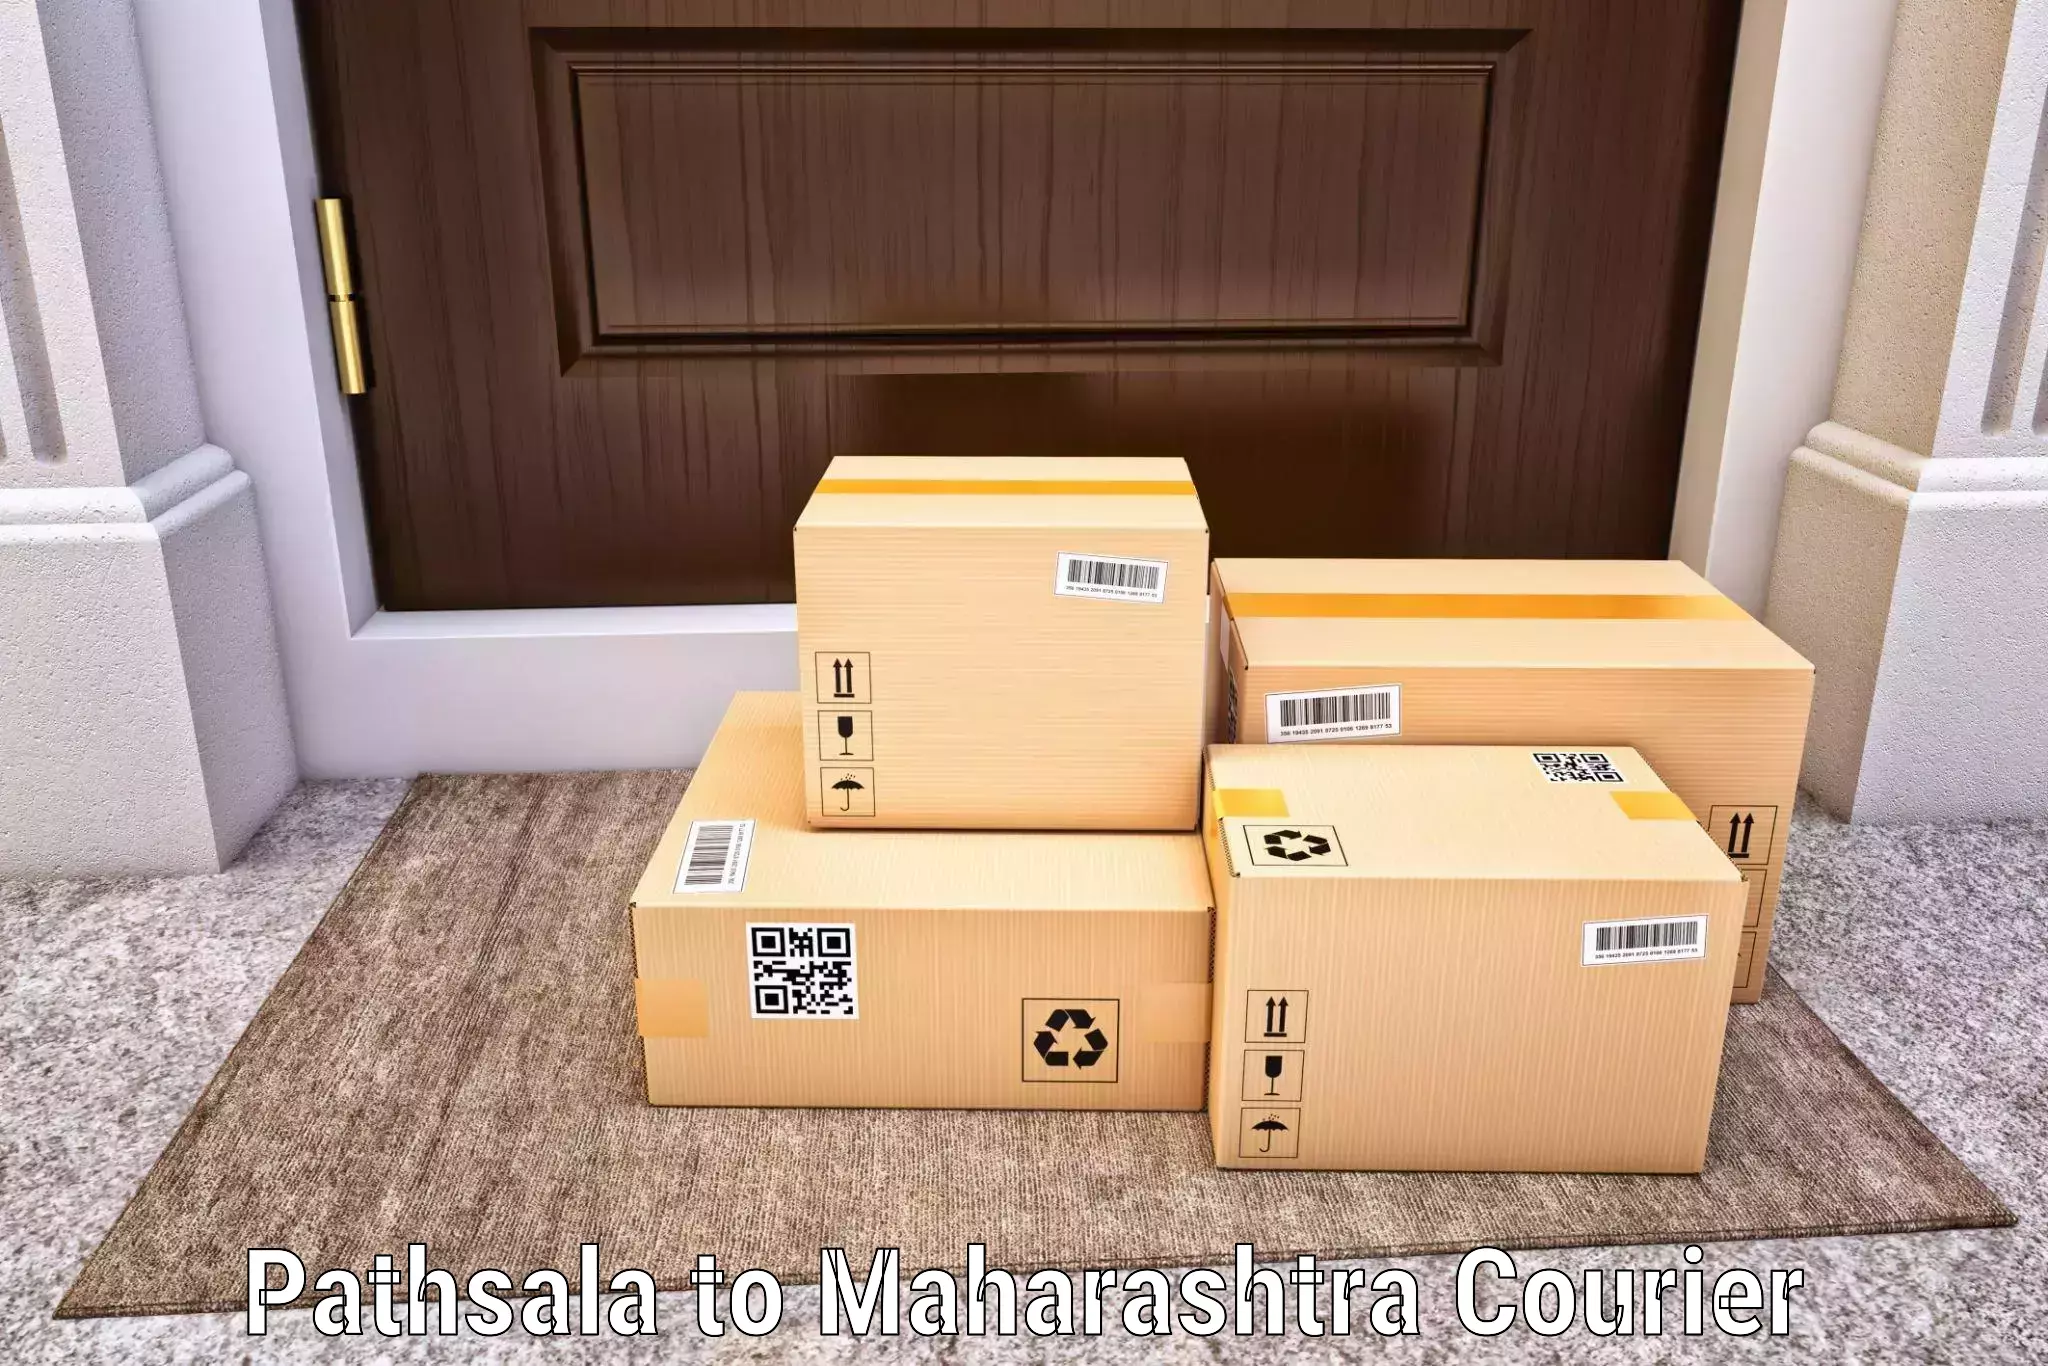 Supply chain efficiency Pathsala to Mahabaleshwar